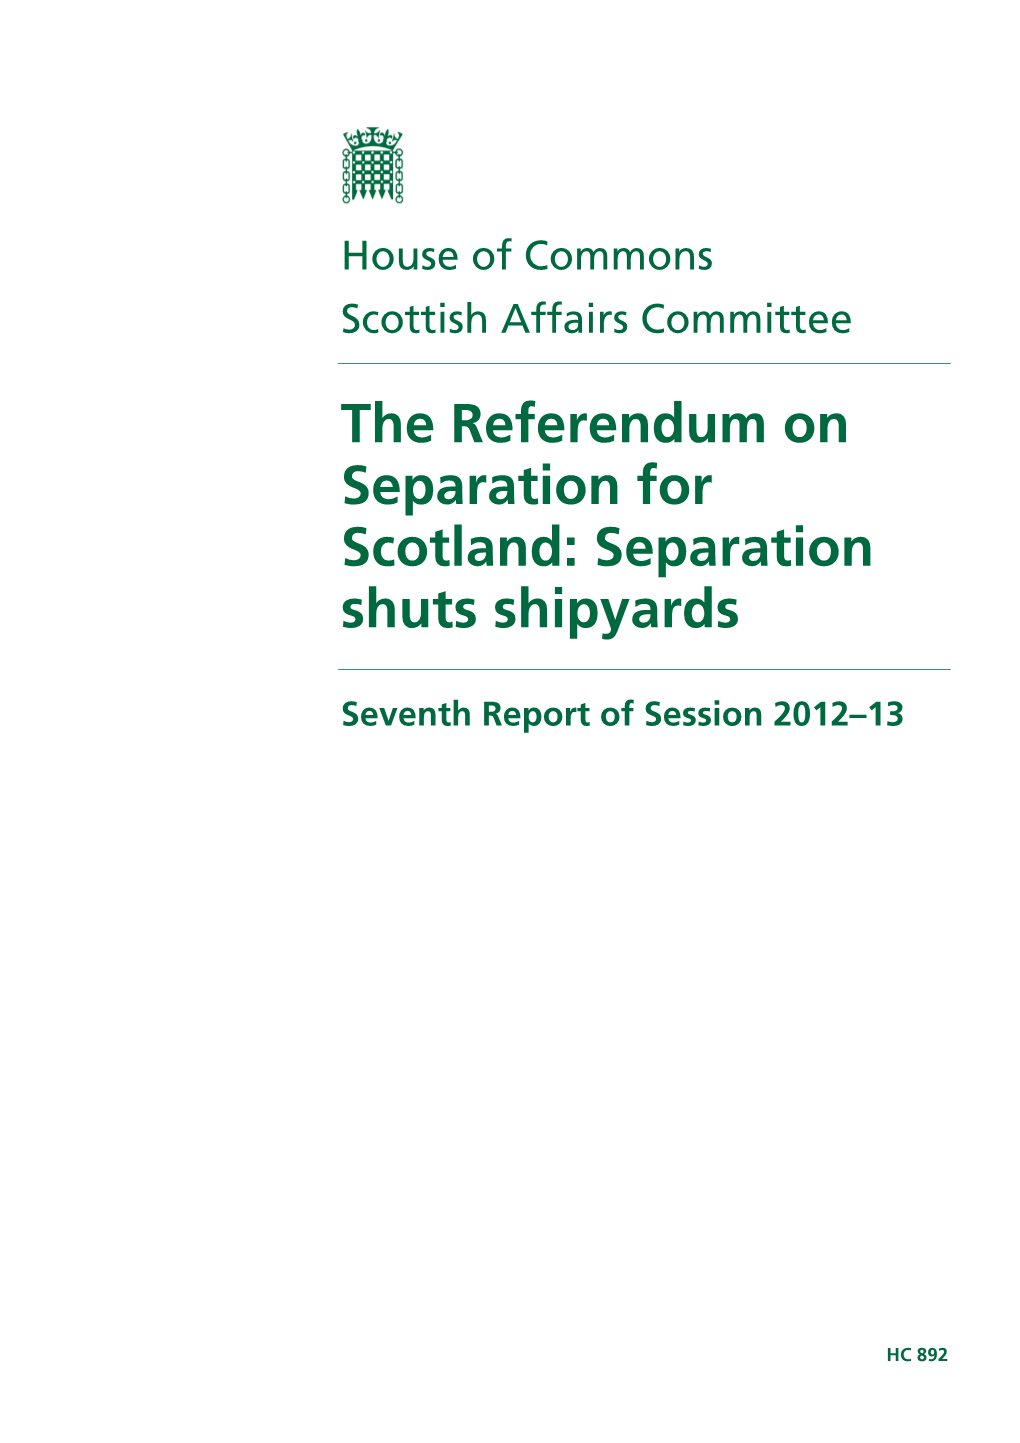 The Referendum on Separation for Scotland: Separation Shuts Shipyards